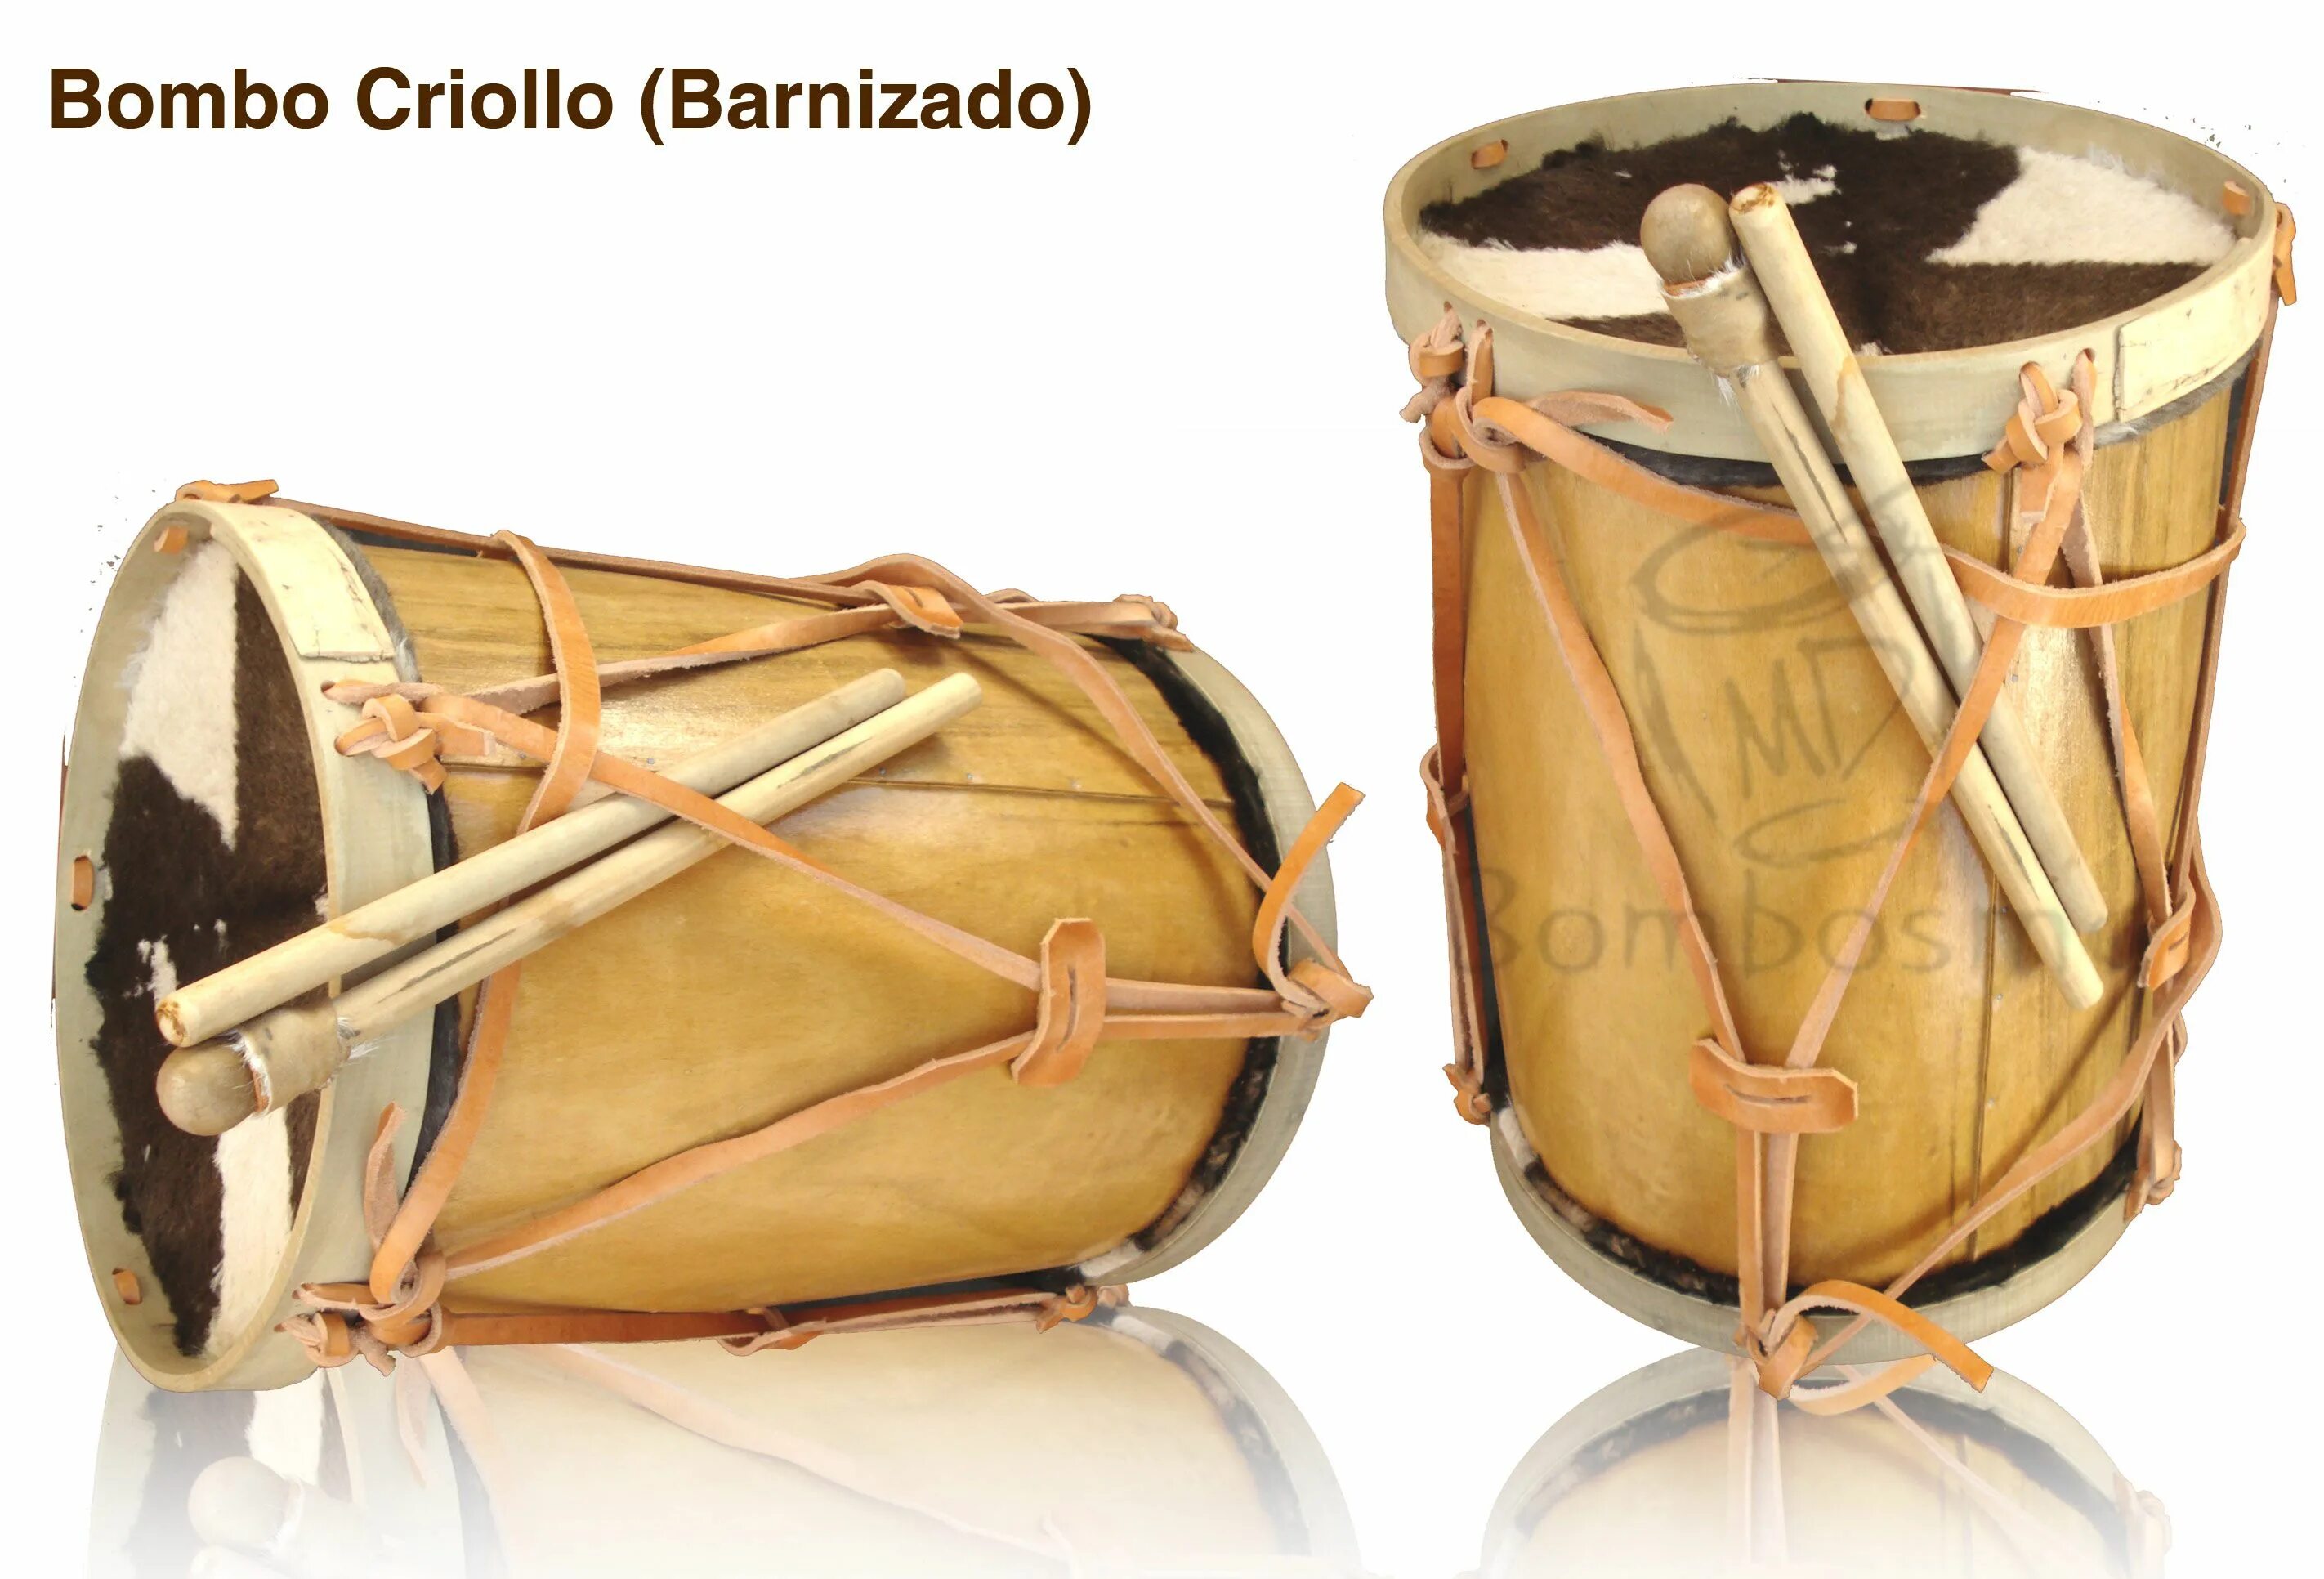 Bombo xxanteria. Бомбо инструмент музыкальный. Bombo аргентинский барабан. Бомбо легуэро. Музыкальный инструмент Гаучо.